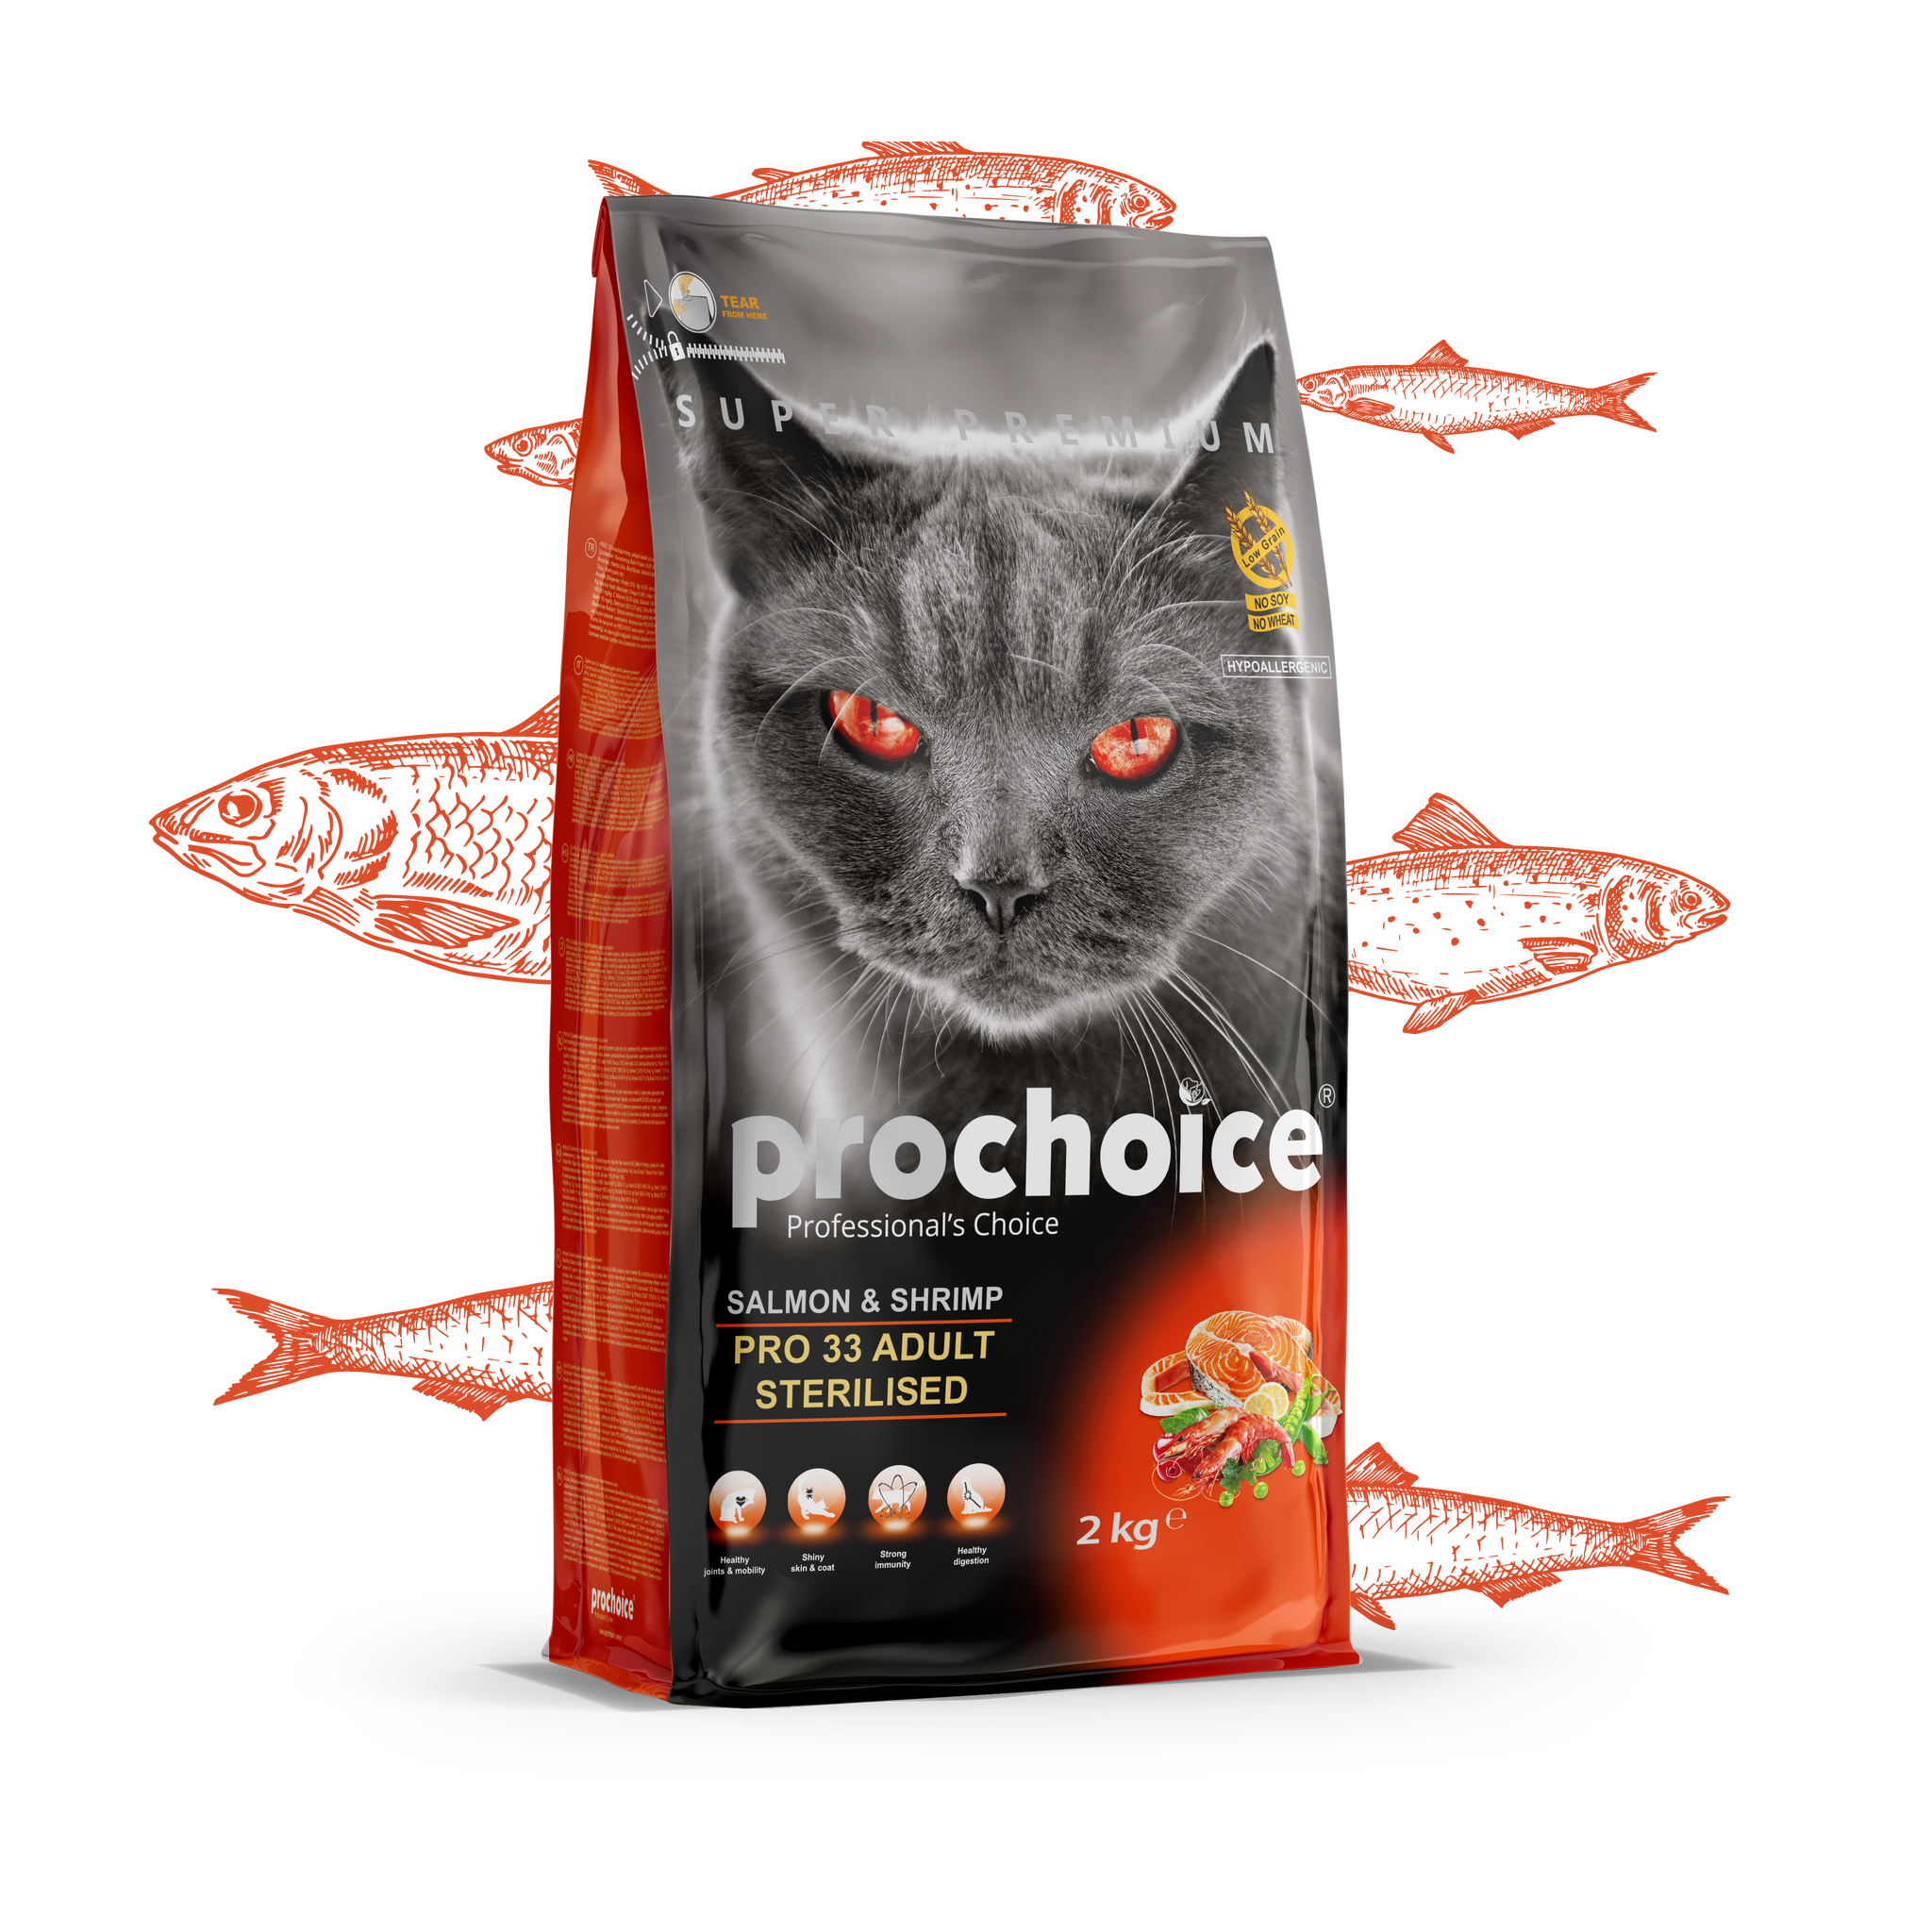 Pro 33 Salmon & Shrimp Formula - Dry Food For Sterilized Cats